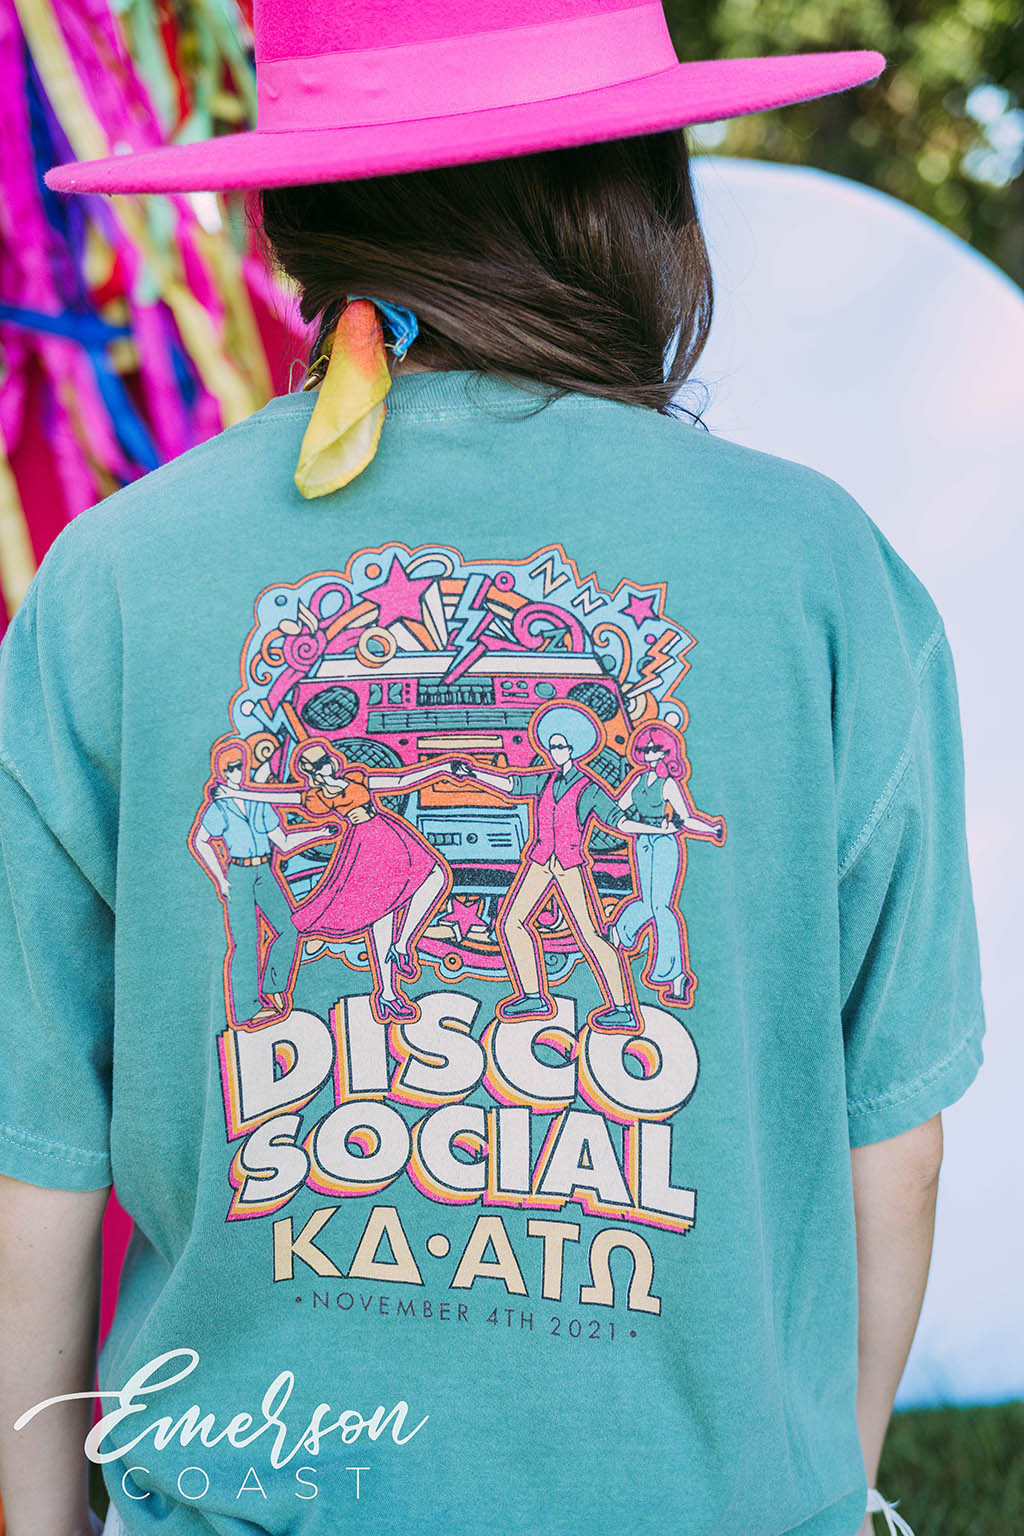 Kappa Delta Disco Social Tee